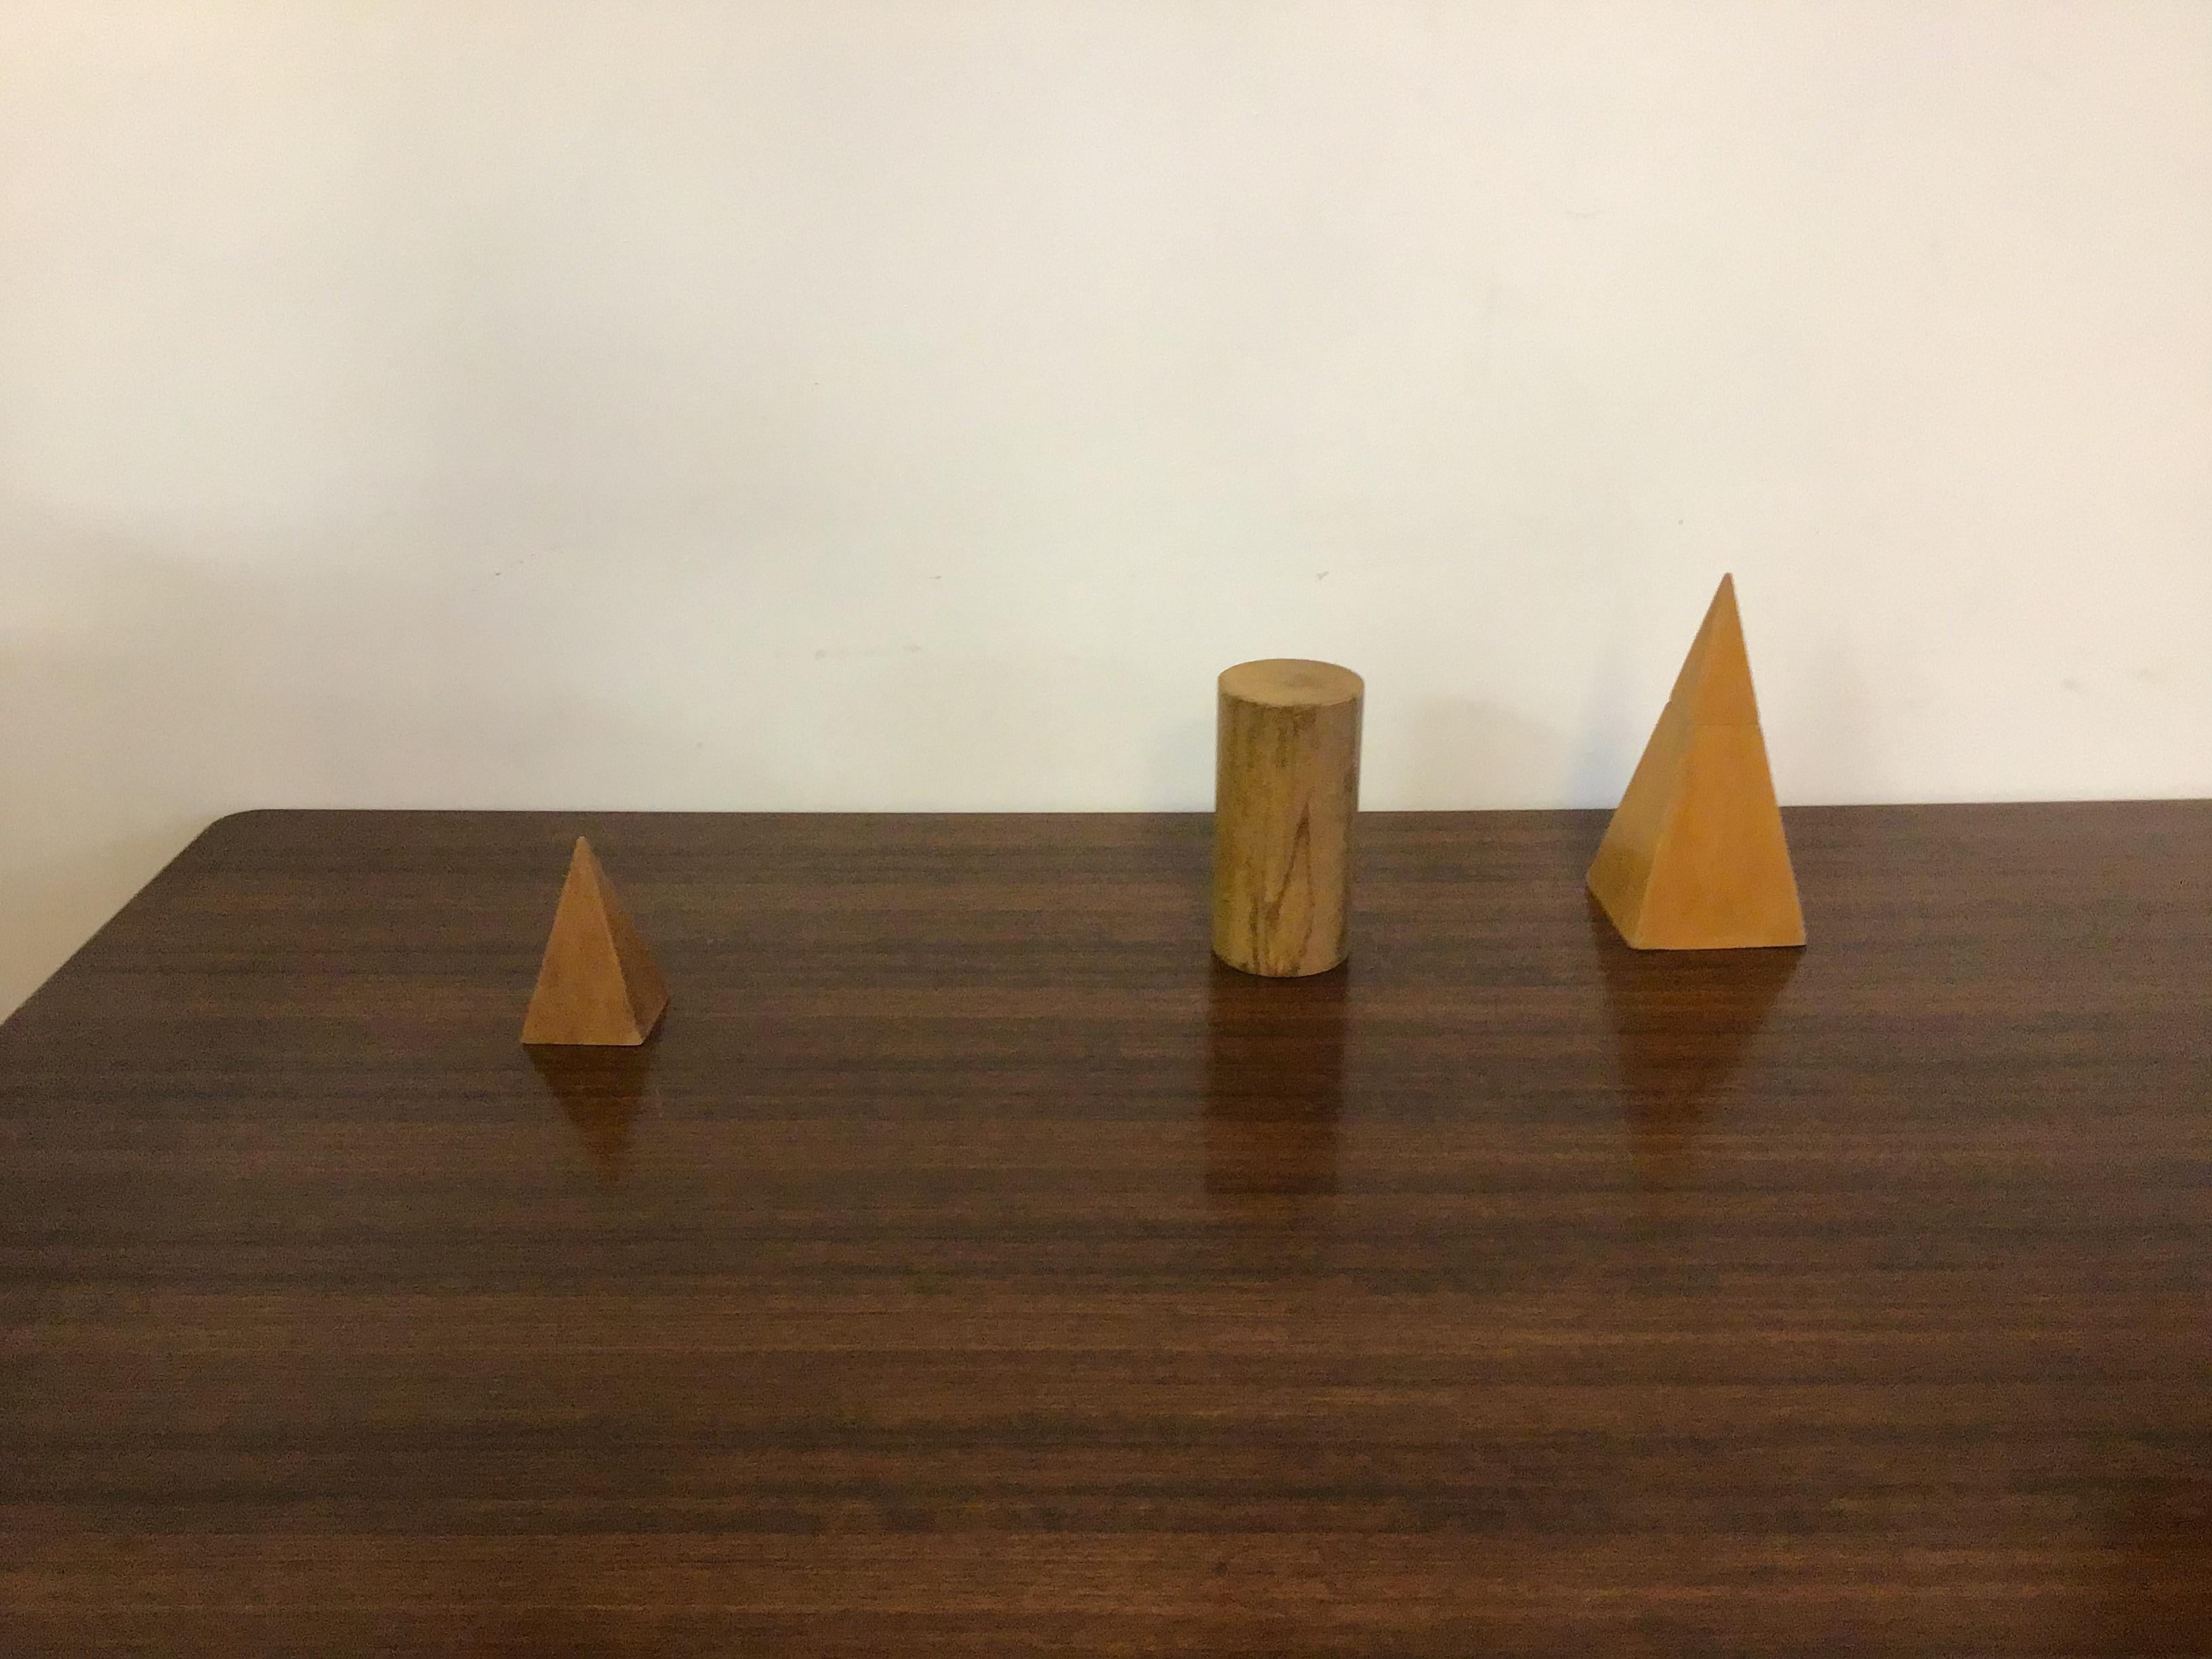 European Set of Vintage Wooden Geometric Shapes